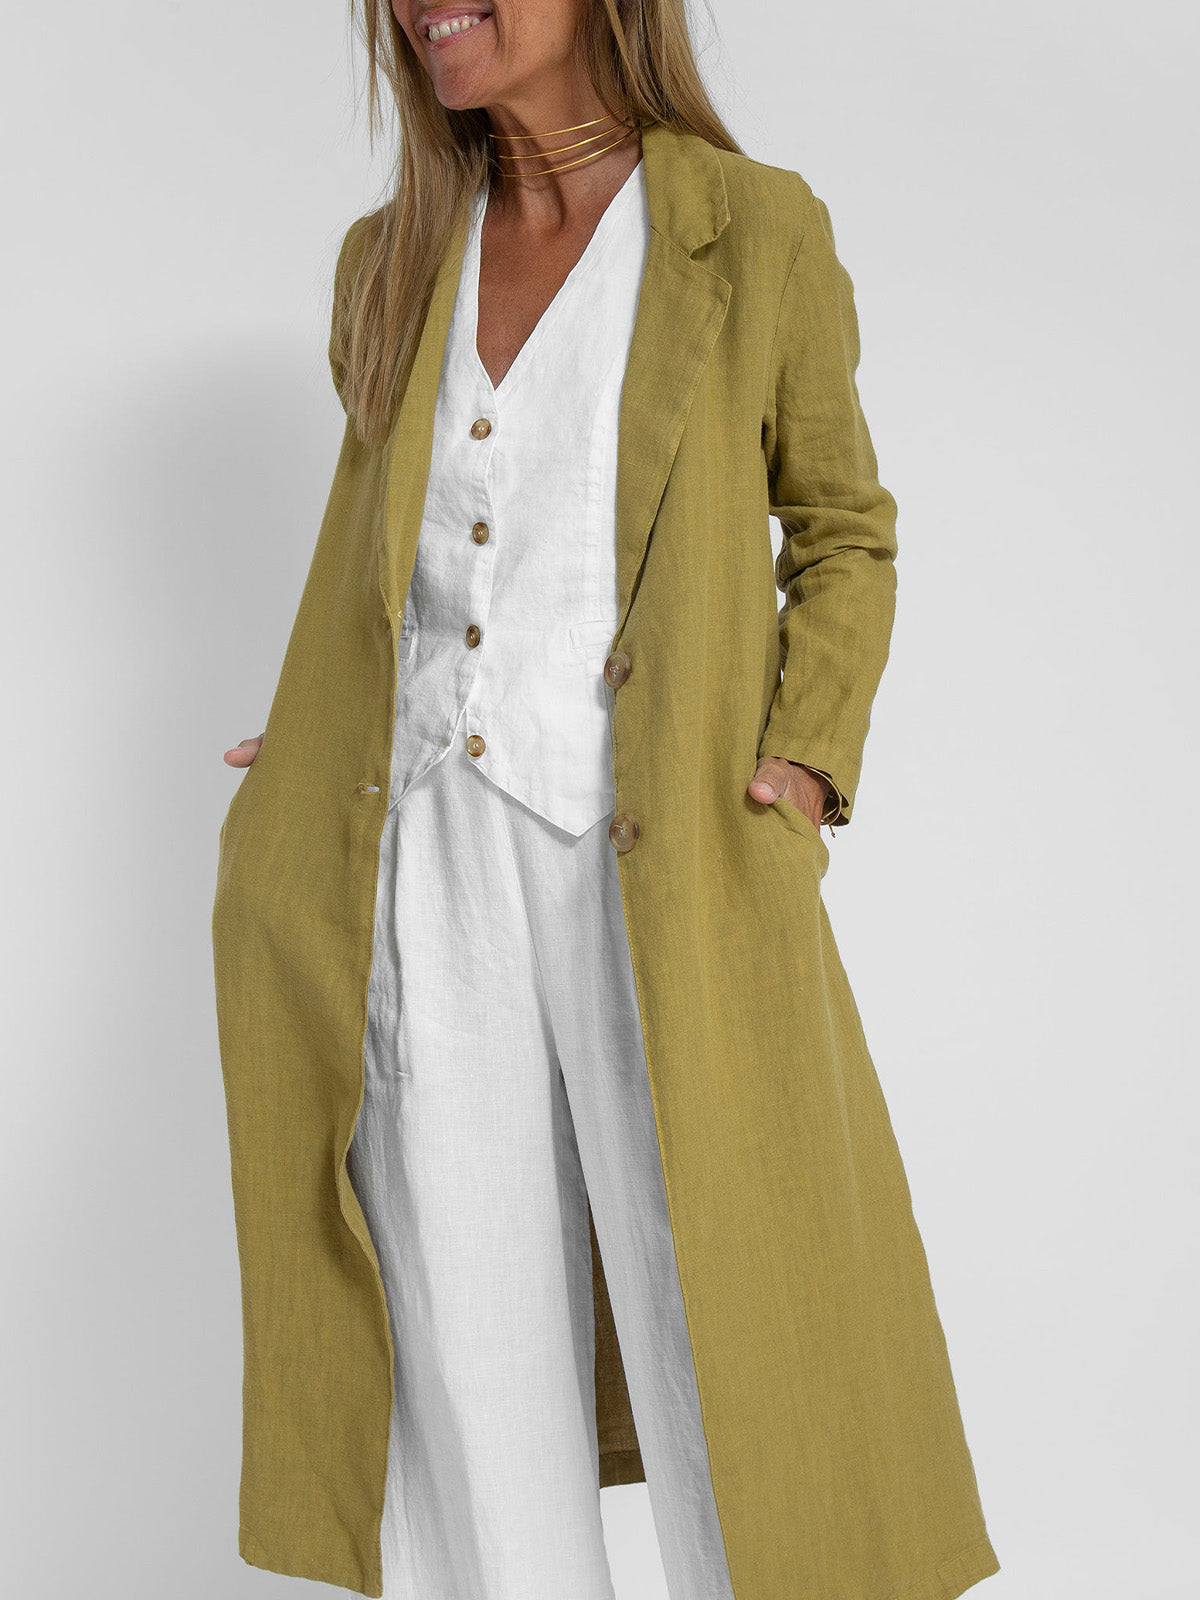 NTG Fad Blazers & Jackets Olive Green / S Cotton Linen Suit Collar Pocket Jacket